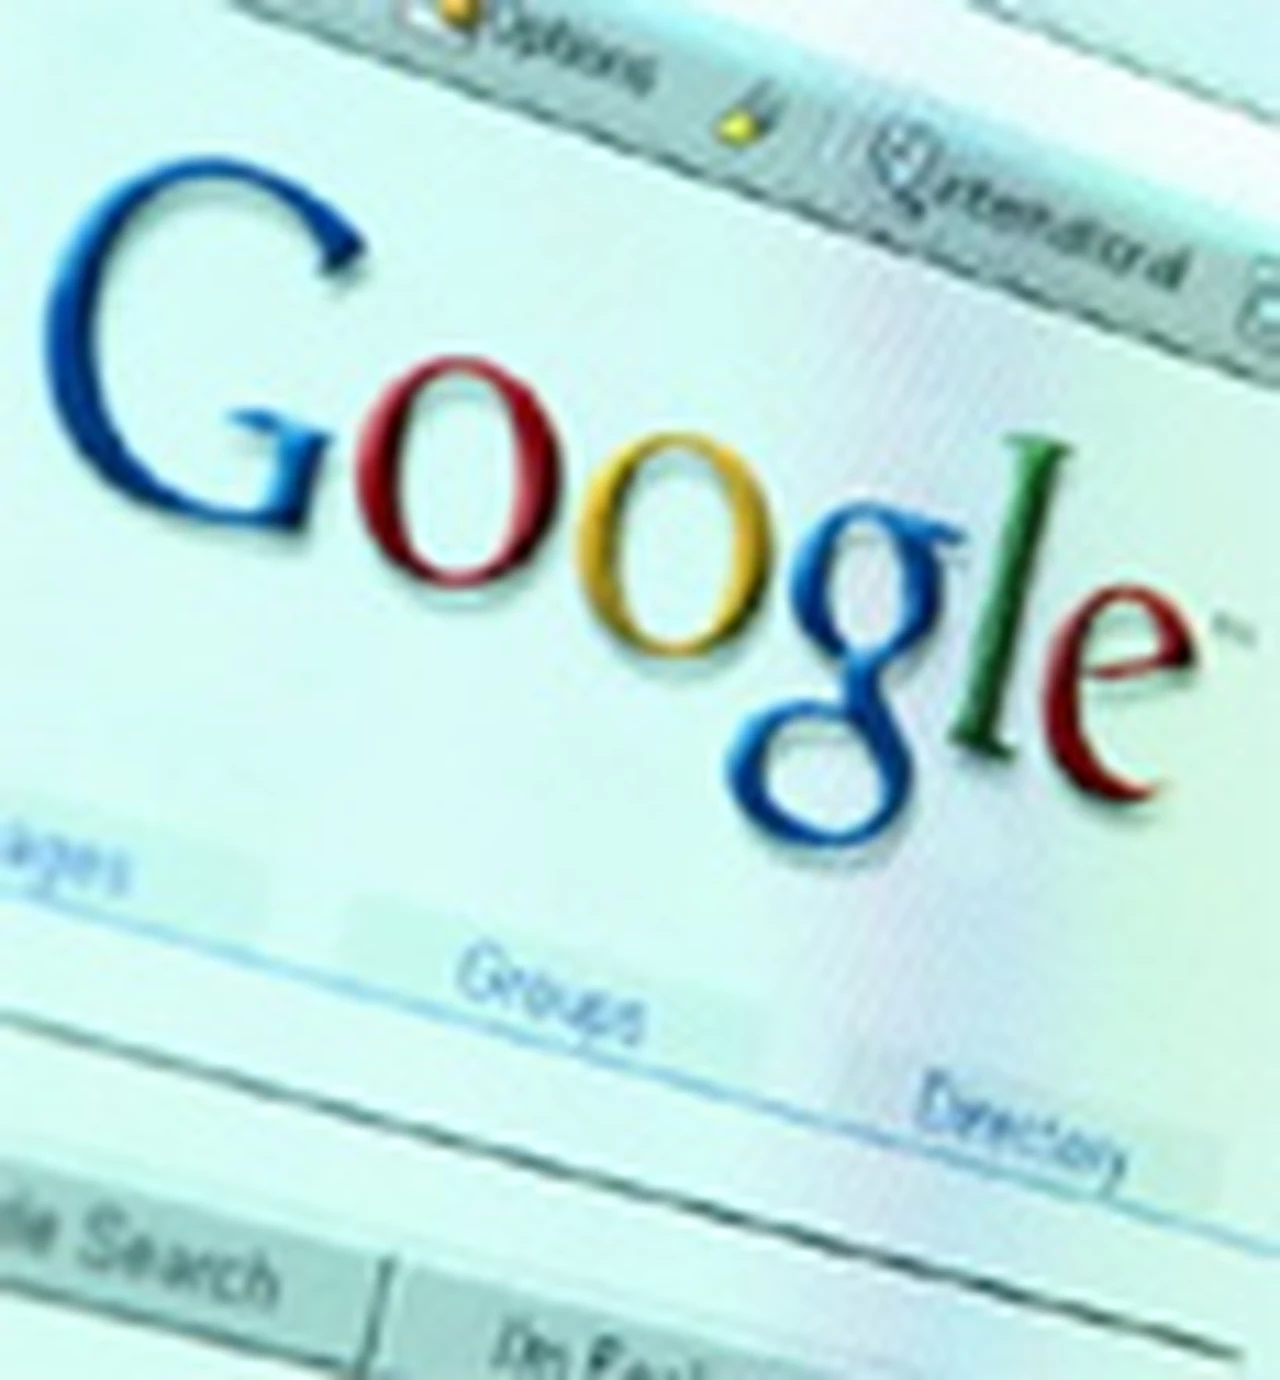 Llega el ranking de búsquedas "minuto a minuto" en Google